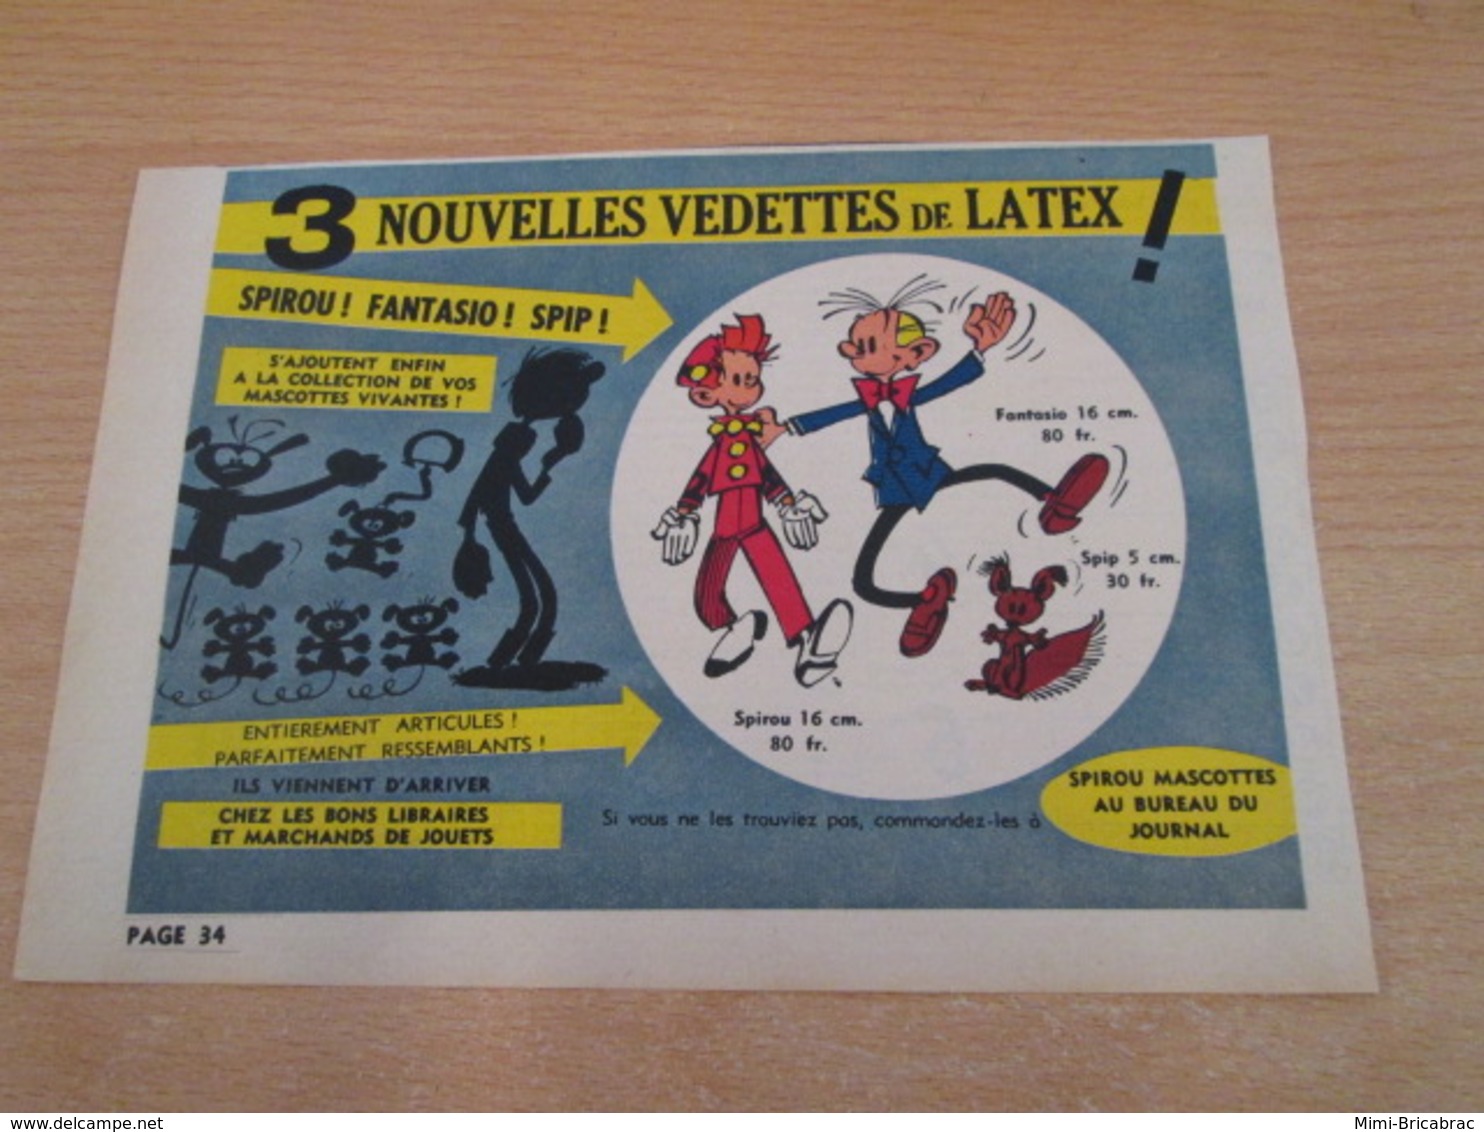 SPI2020 Issu De Spirou  1/2 PAGE DE PUBLICITE ANNEES 50/60 FIGURINES LATEX GASTON LAGAFFE FANTASIO SPIP - Little Figures - Plastic